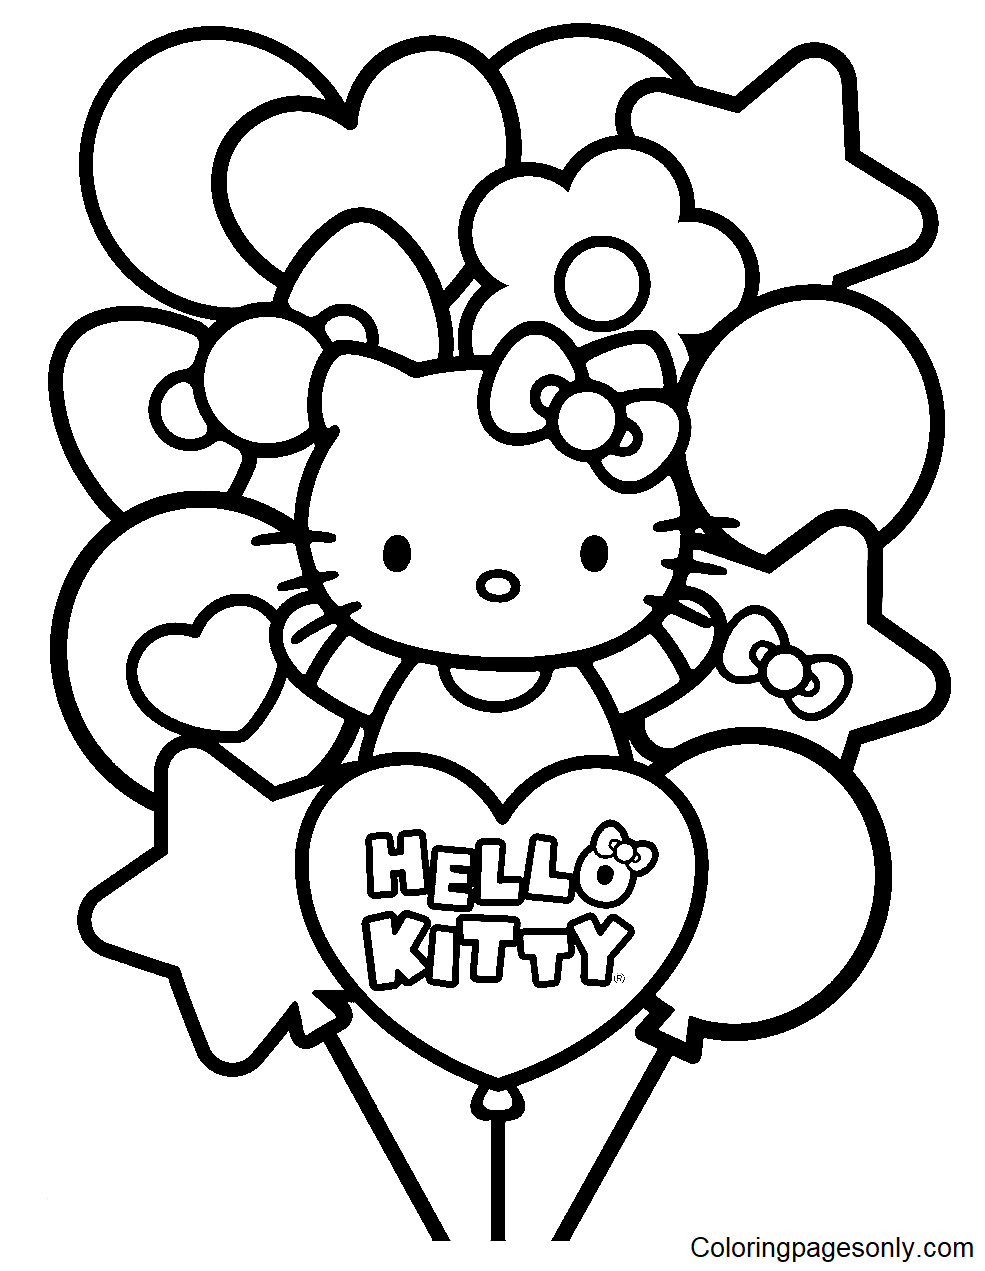 Adorável Hello Kitty da Hello Kitty